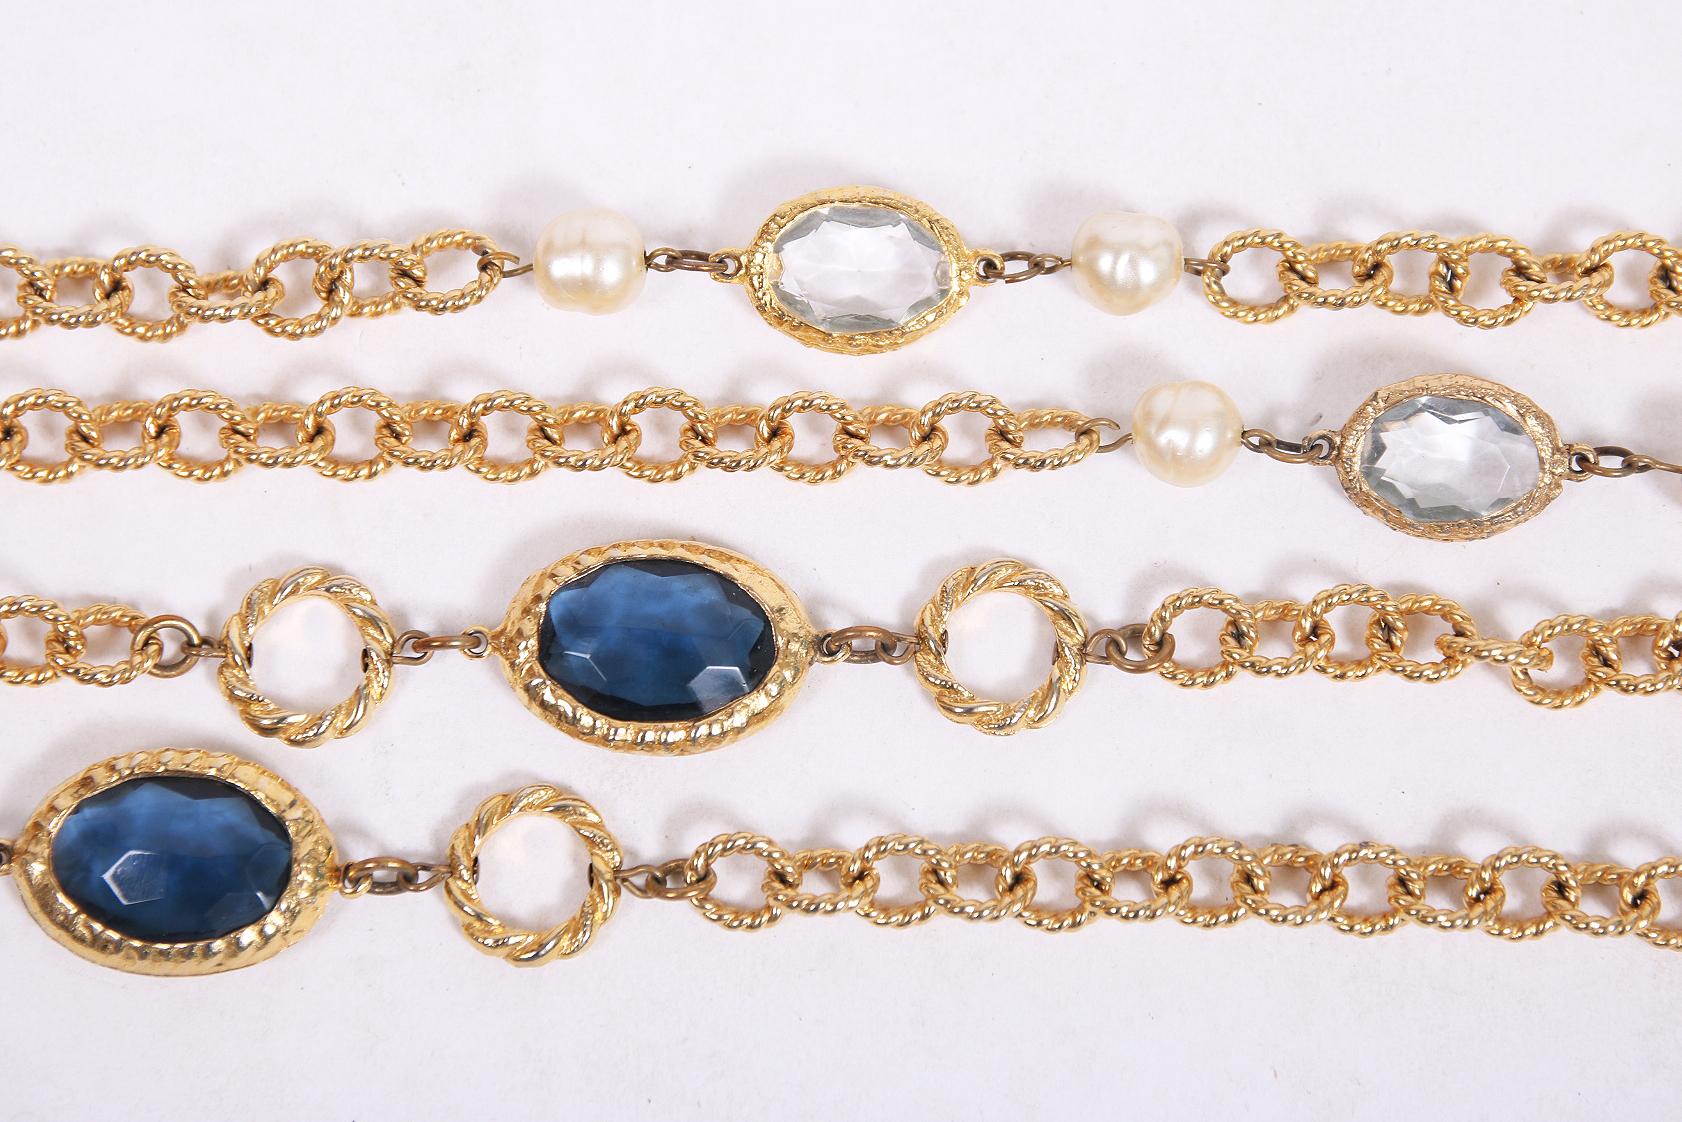 Vintage Chanel 1981 Sautoir Chain Necklace w/Pearl & Bevel-Set Gripoix beads For Sale 1